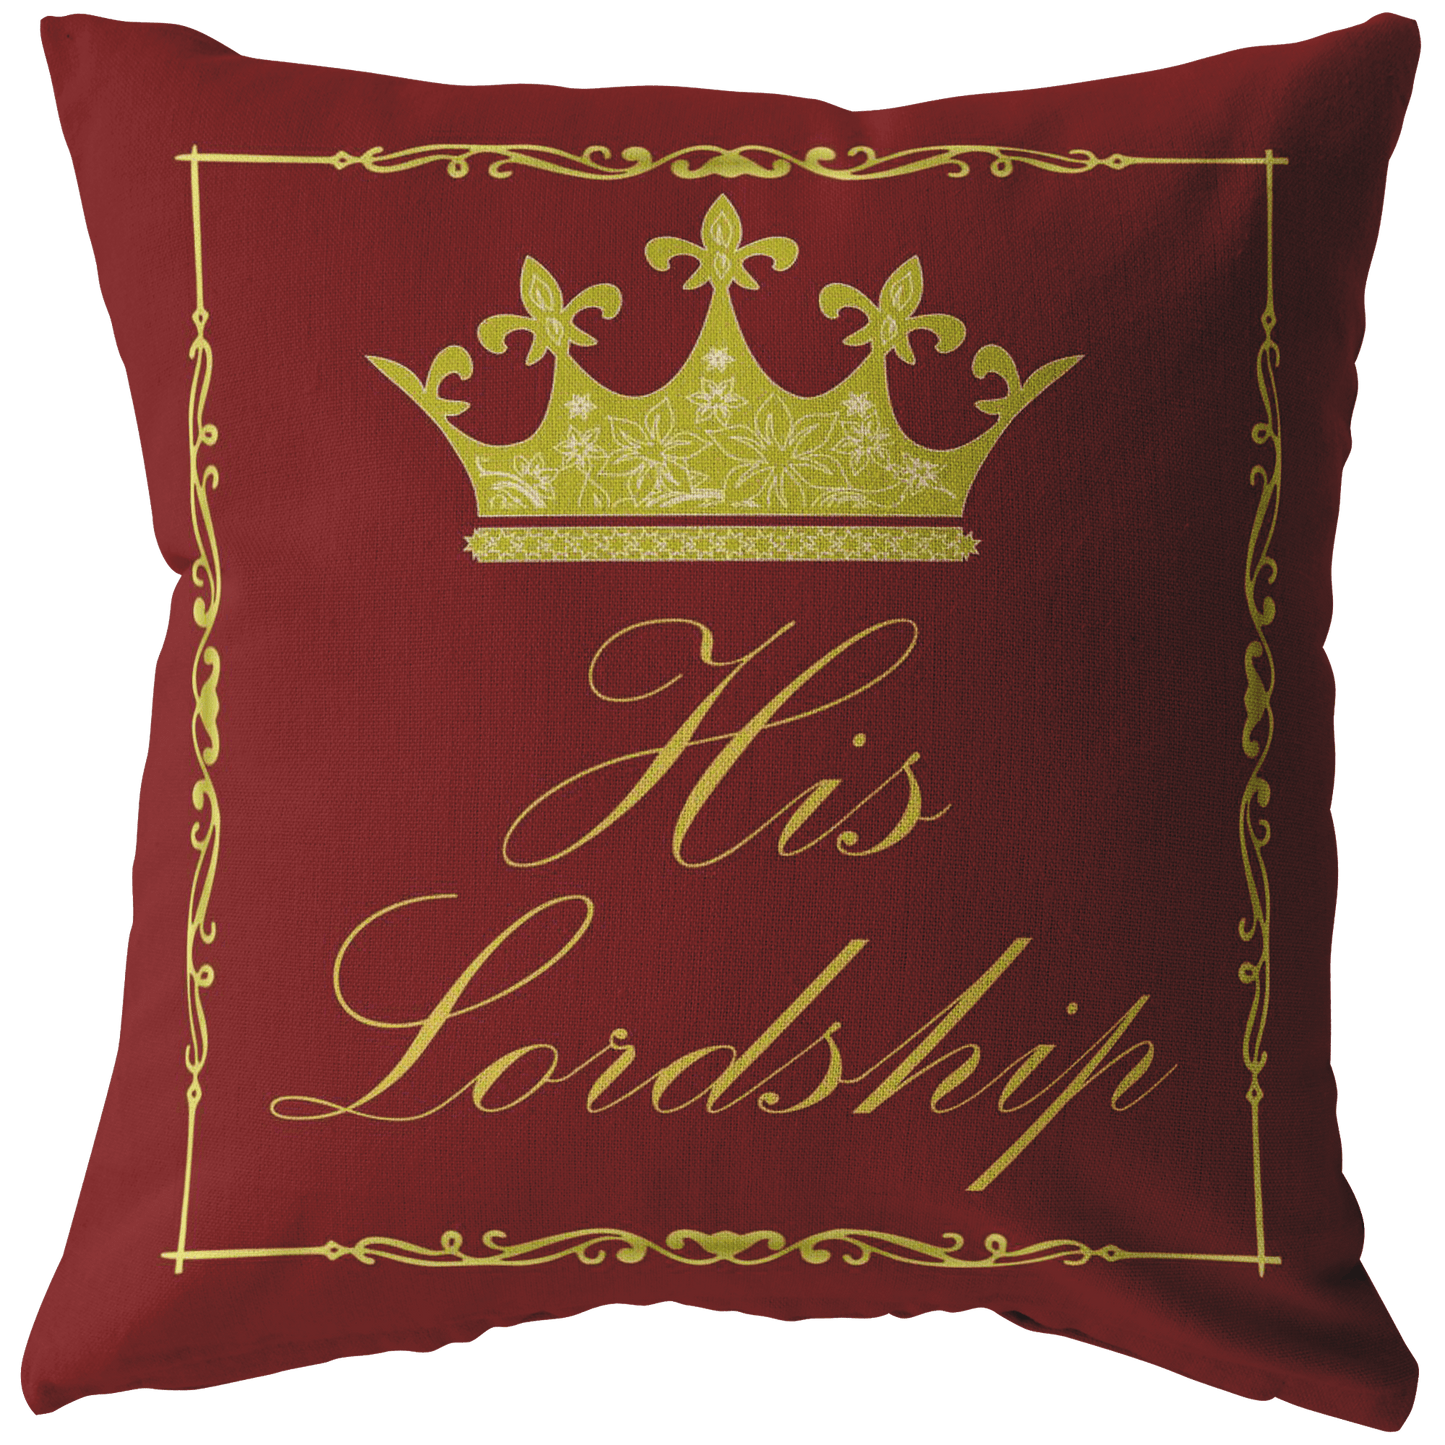 His Lordship Pillow - Giftagic